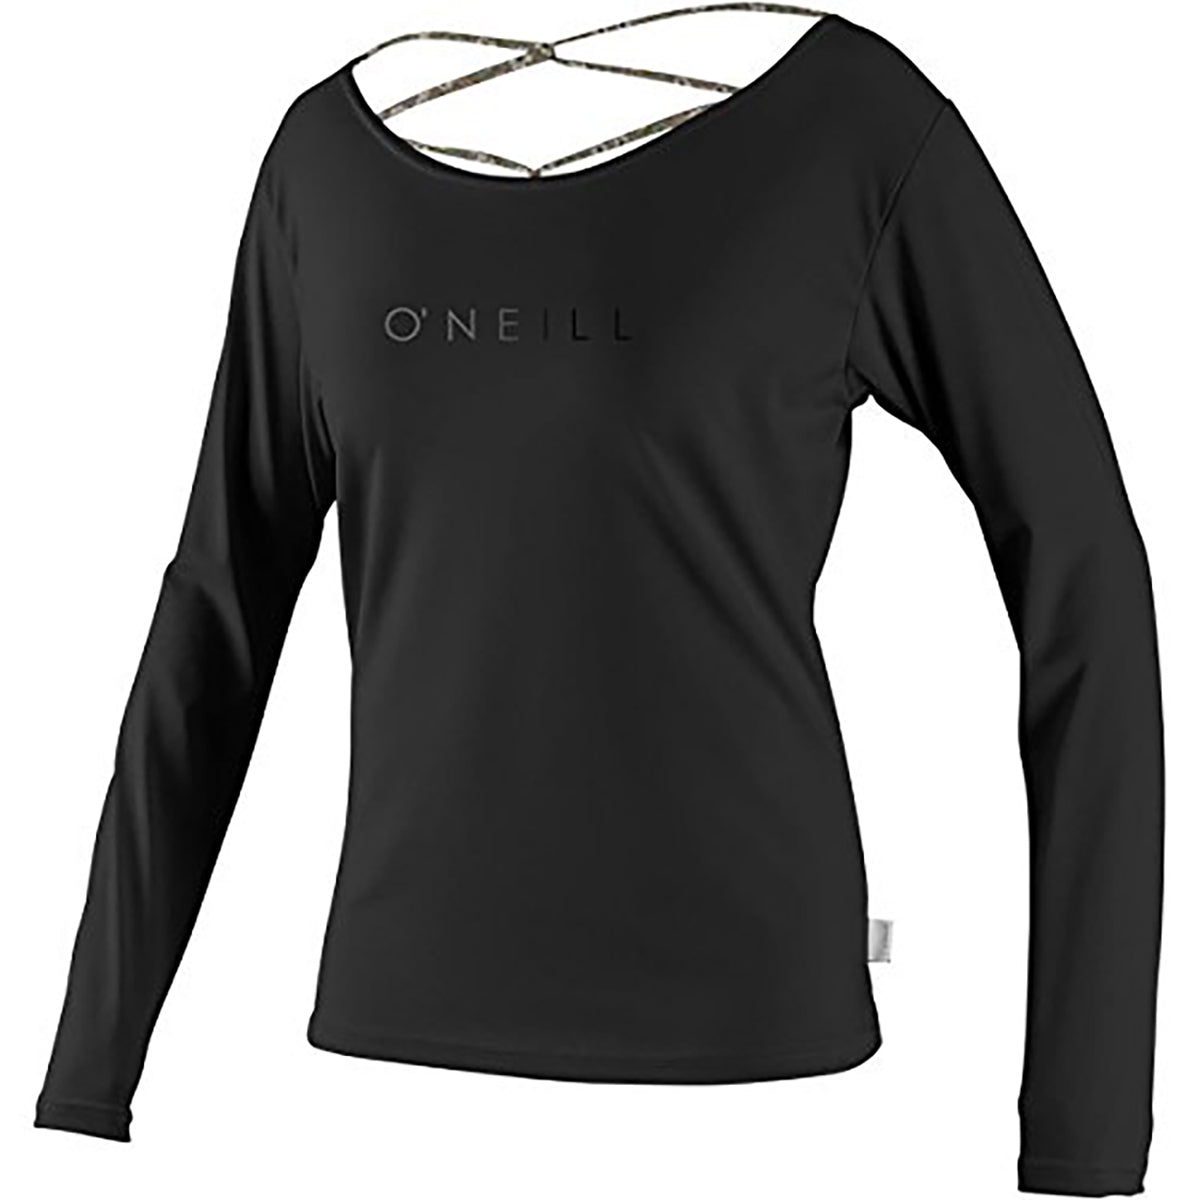 O'Neill Strap Back Women's Long-Sleeve Rashguard Suit - Black/Floral